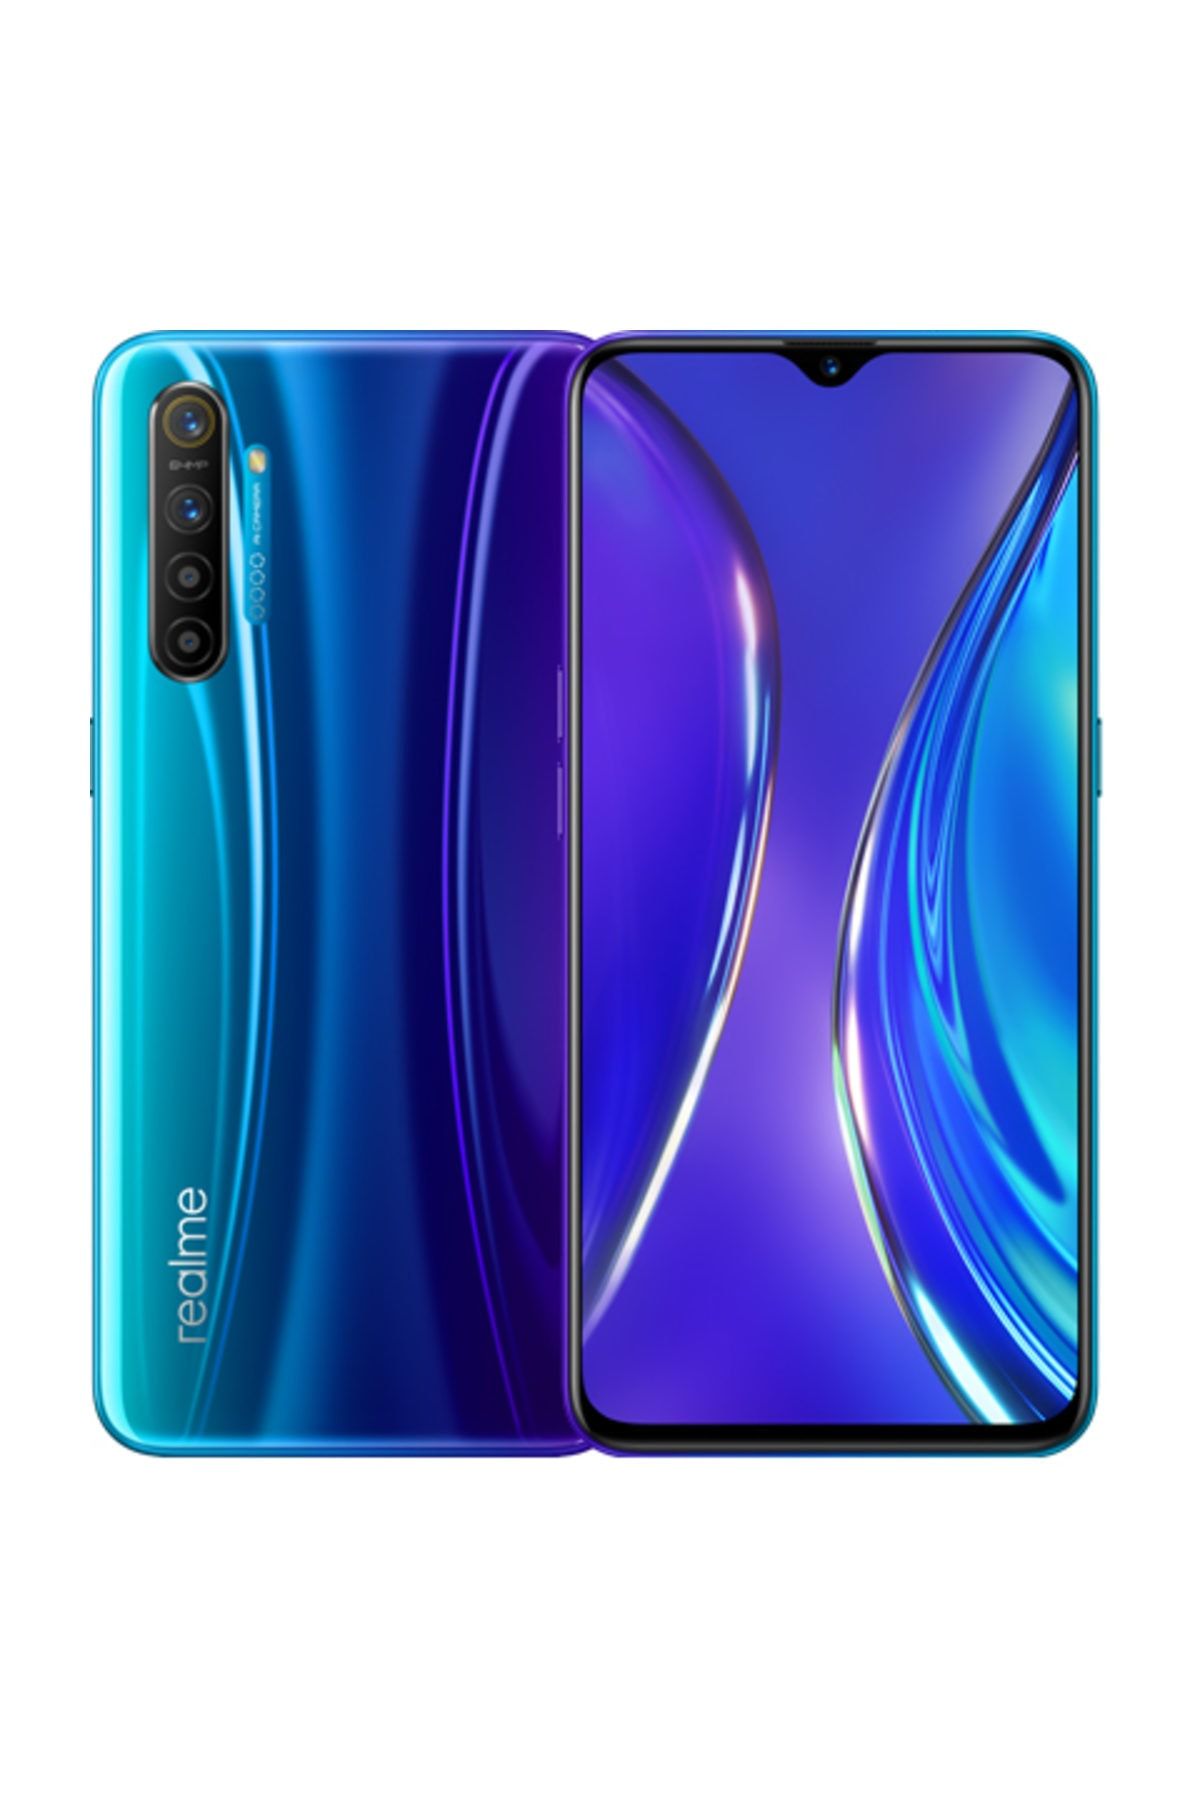 realme XT 8GB+128GB İnci Mavisi Cep Telefonu (Oppo Realme Türkiye Garantili)